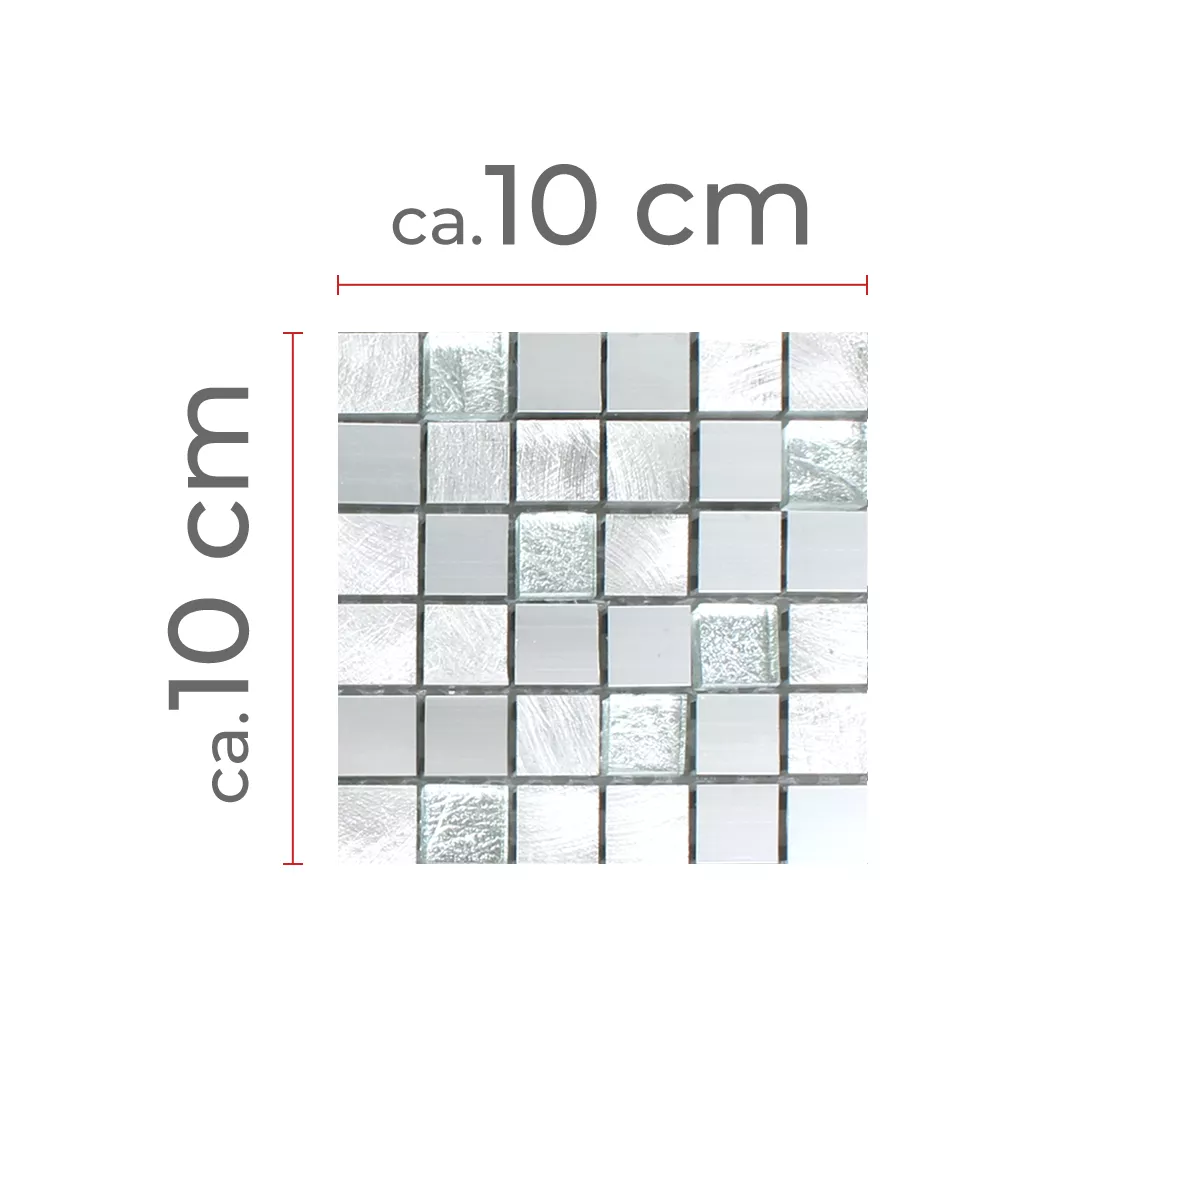 Sample Mozaïektegel Lissabon Aluminium Glas Mix Zilver